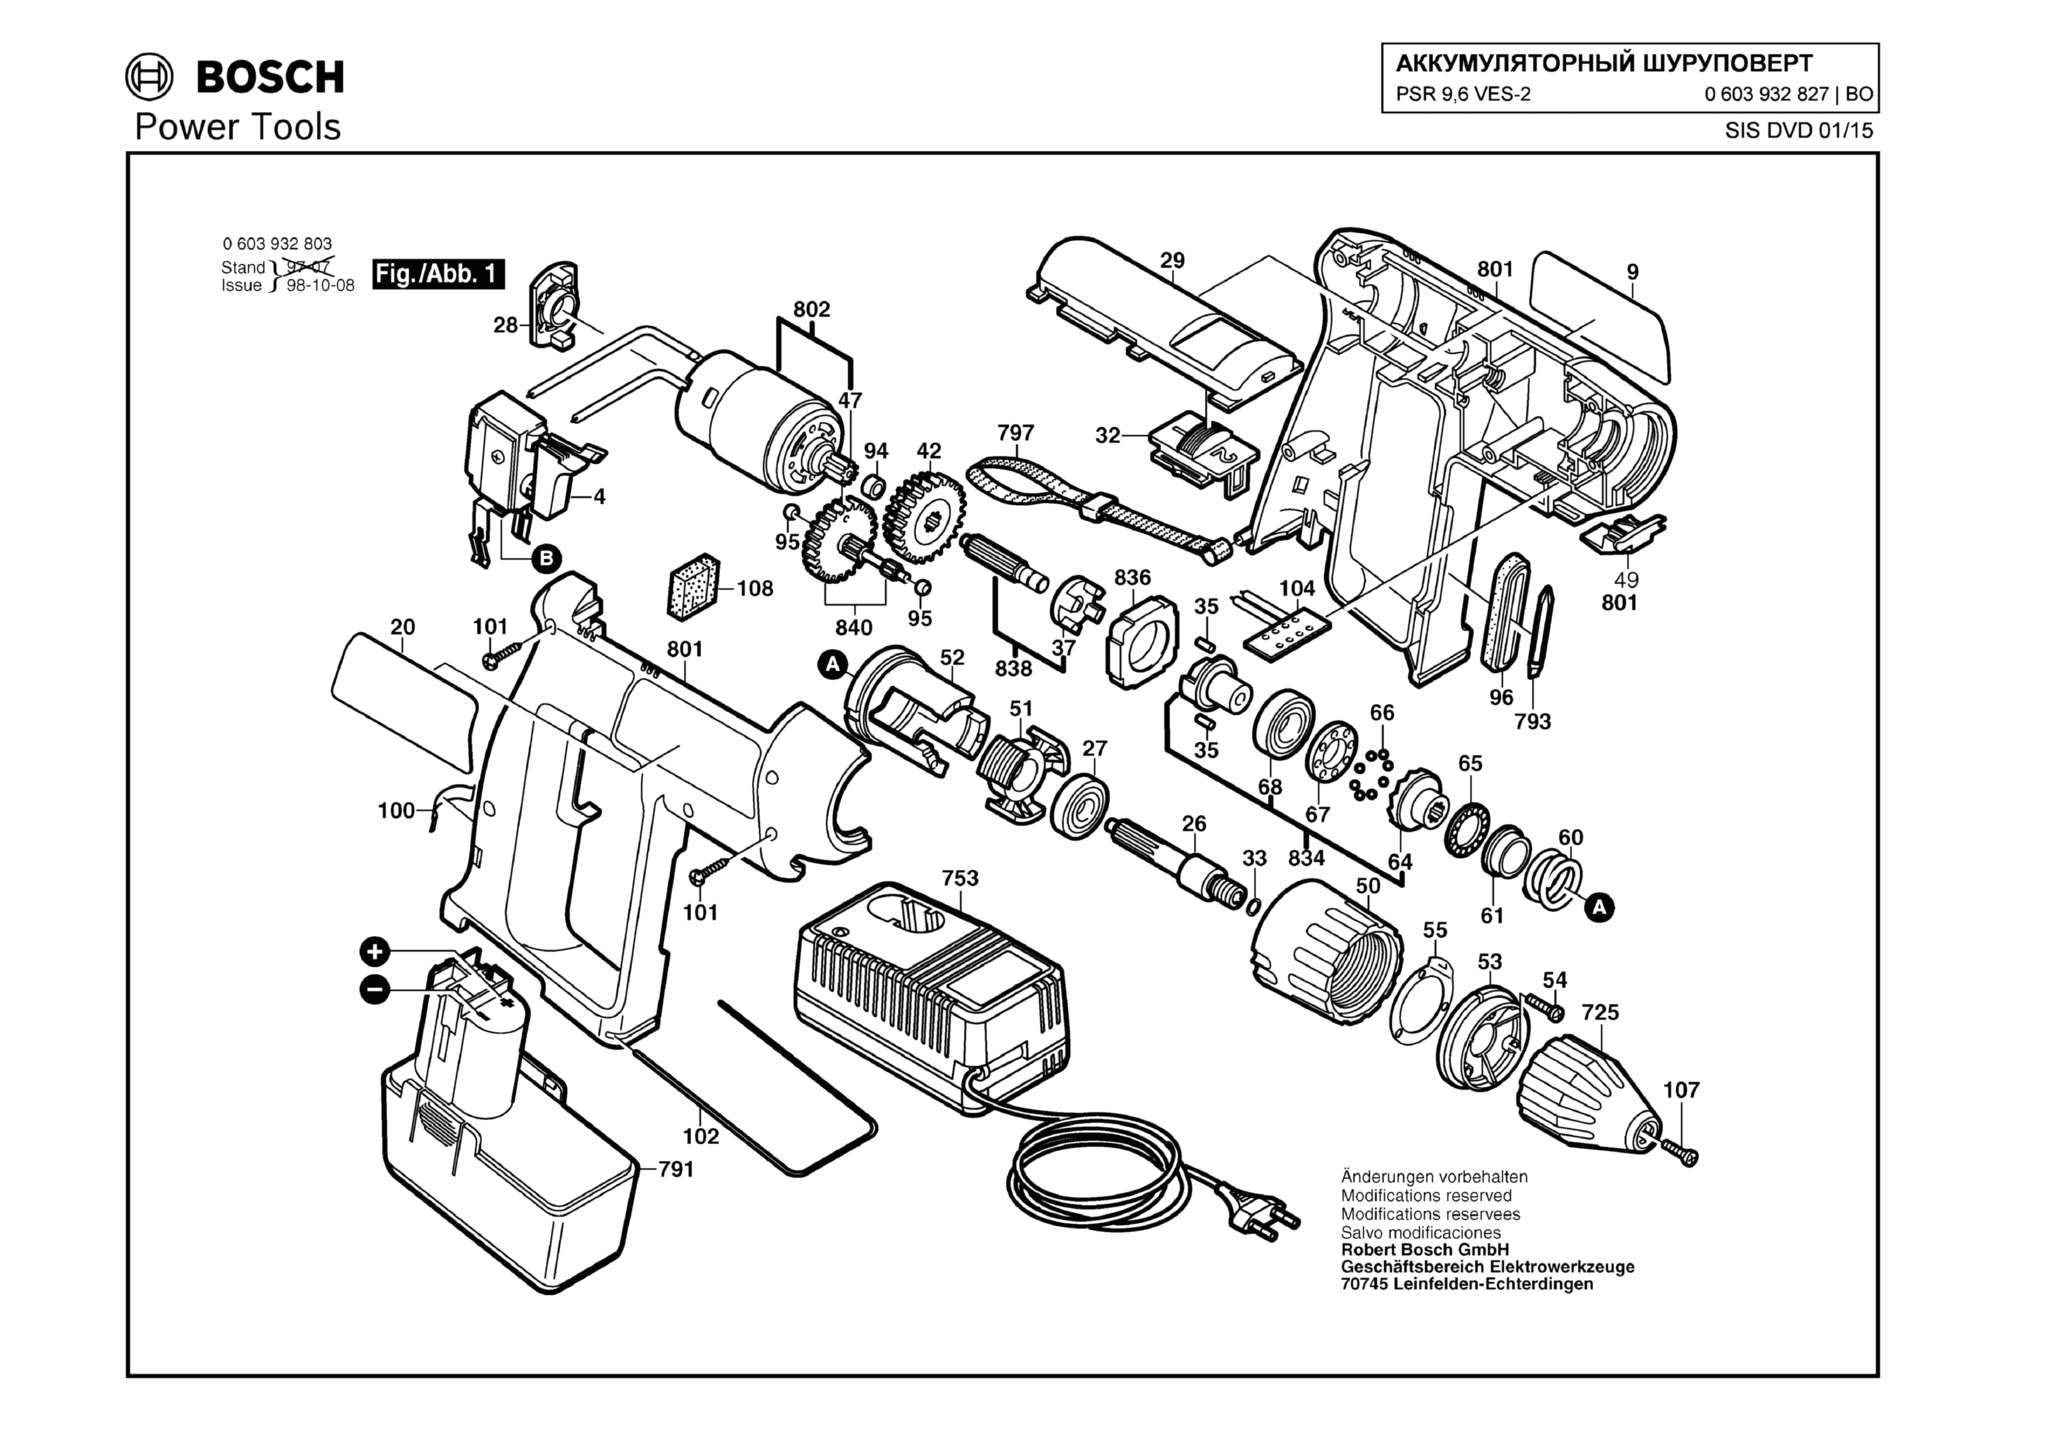 Запчасти, схема и деталировка Bosch PSR 9,6 VES-2 (ТИП 0603932827)